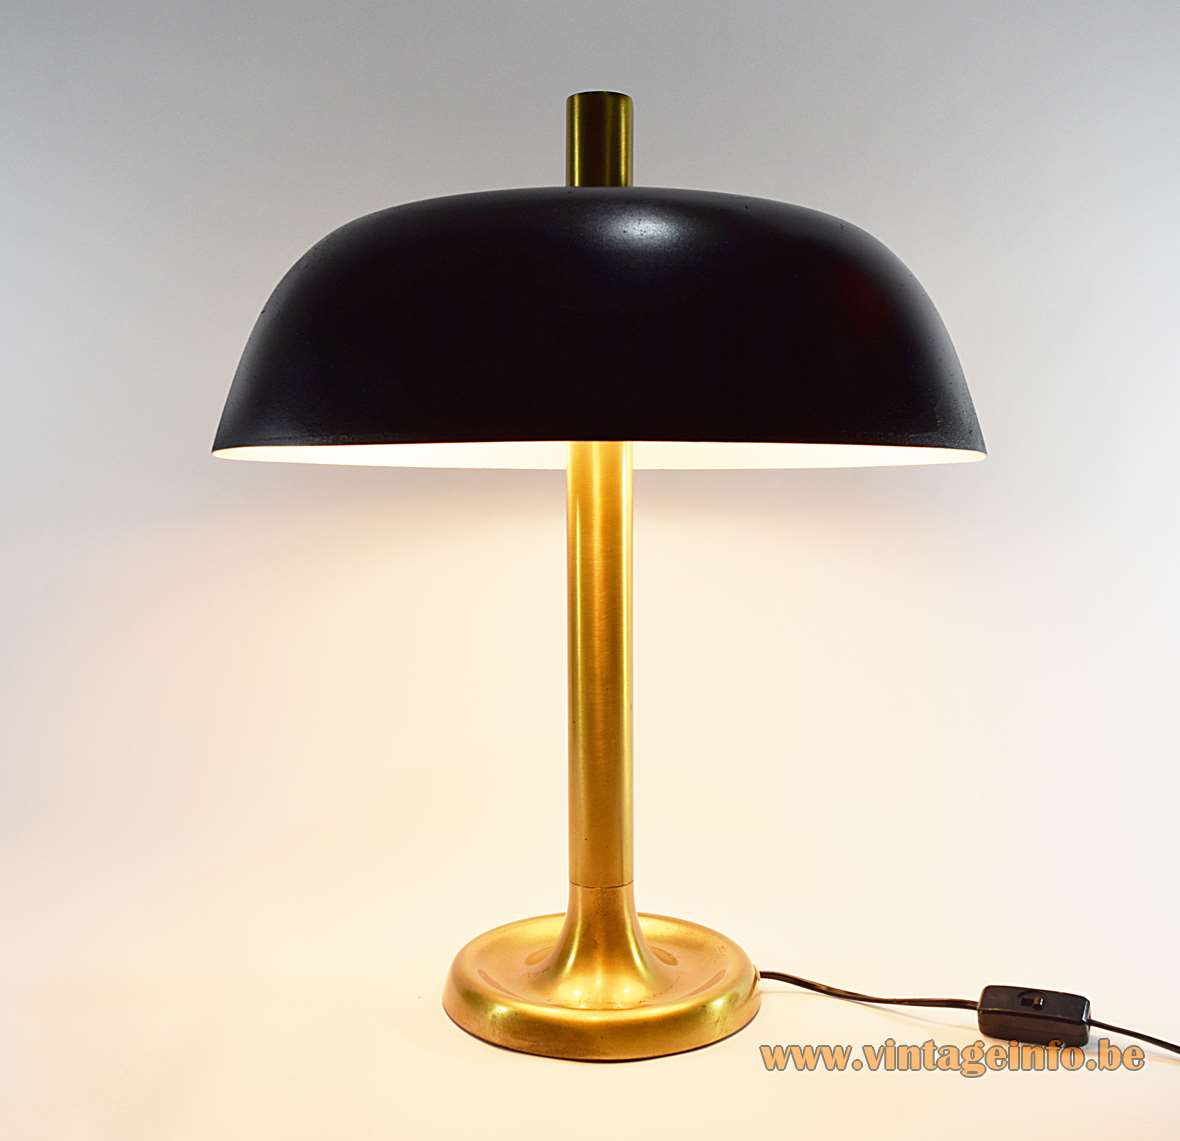 Hillebrand table lamp 7377 thick brass base & rod black aluminium mushroom lampshade Germany 1970s design